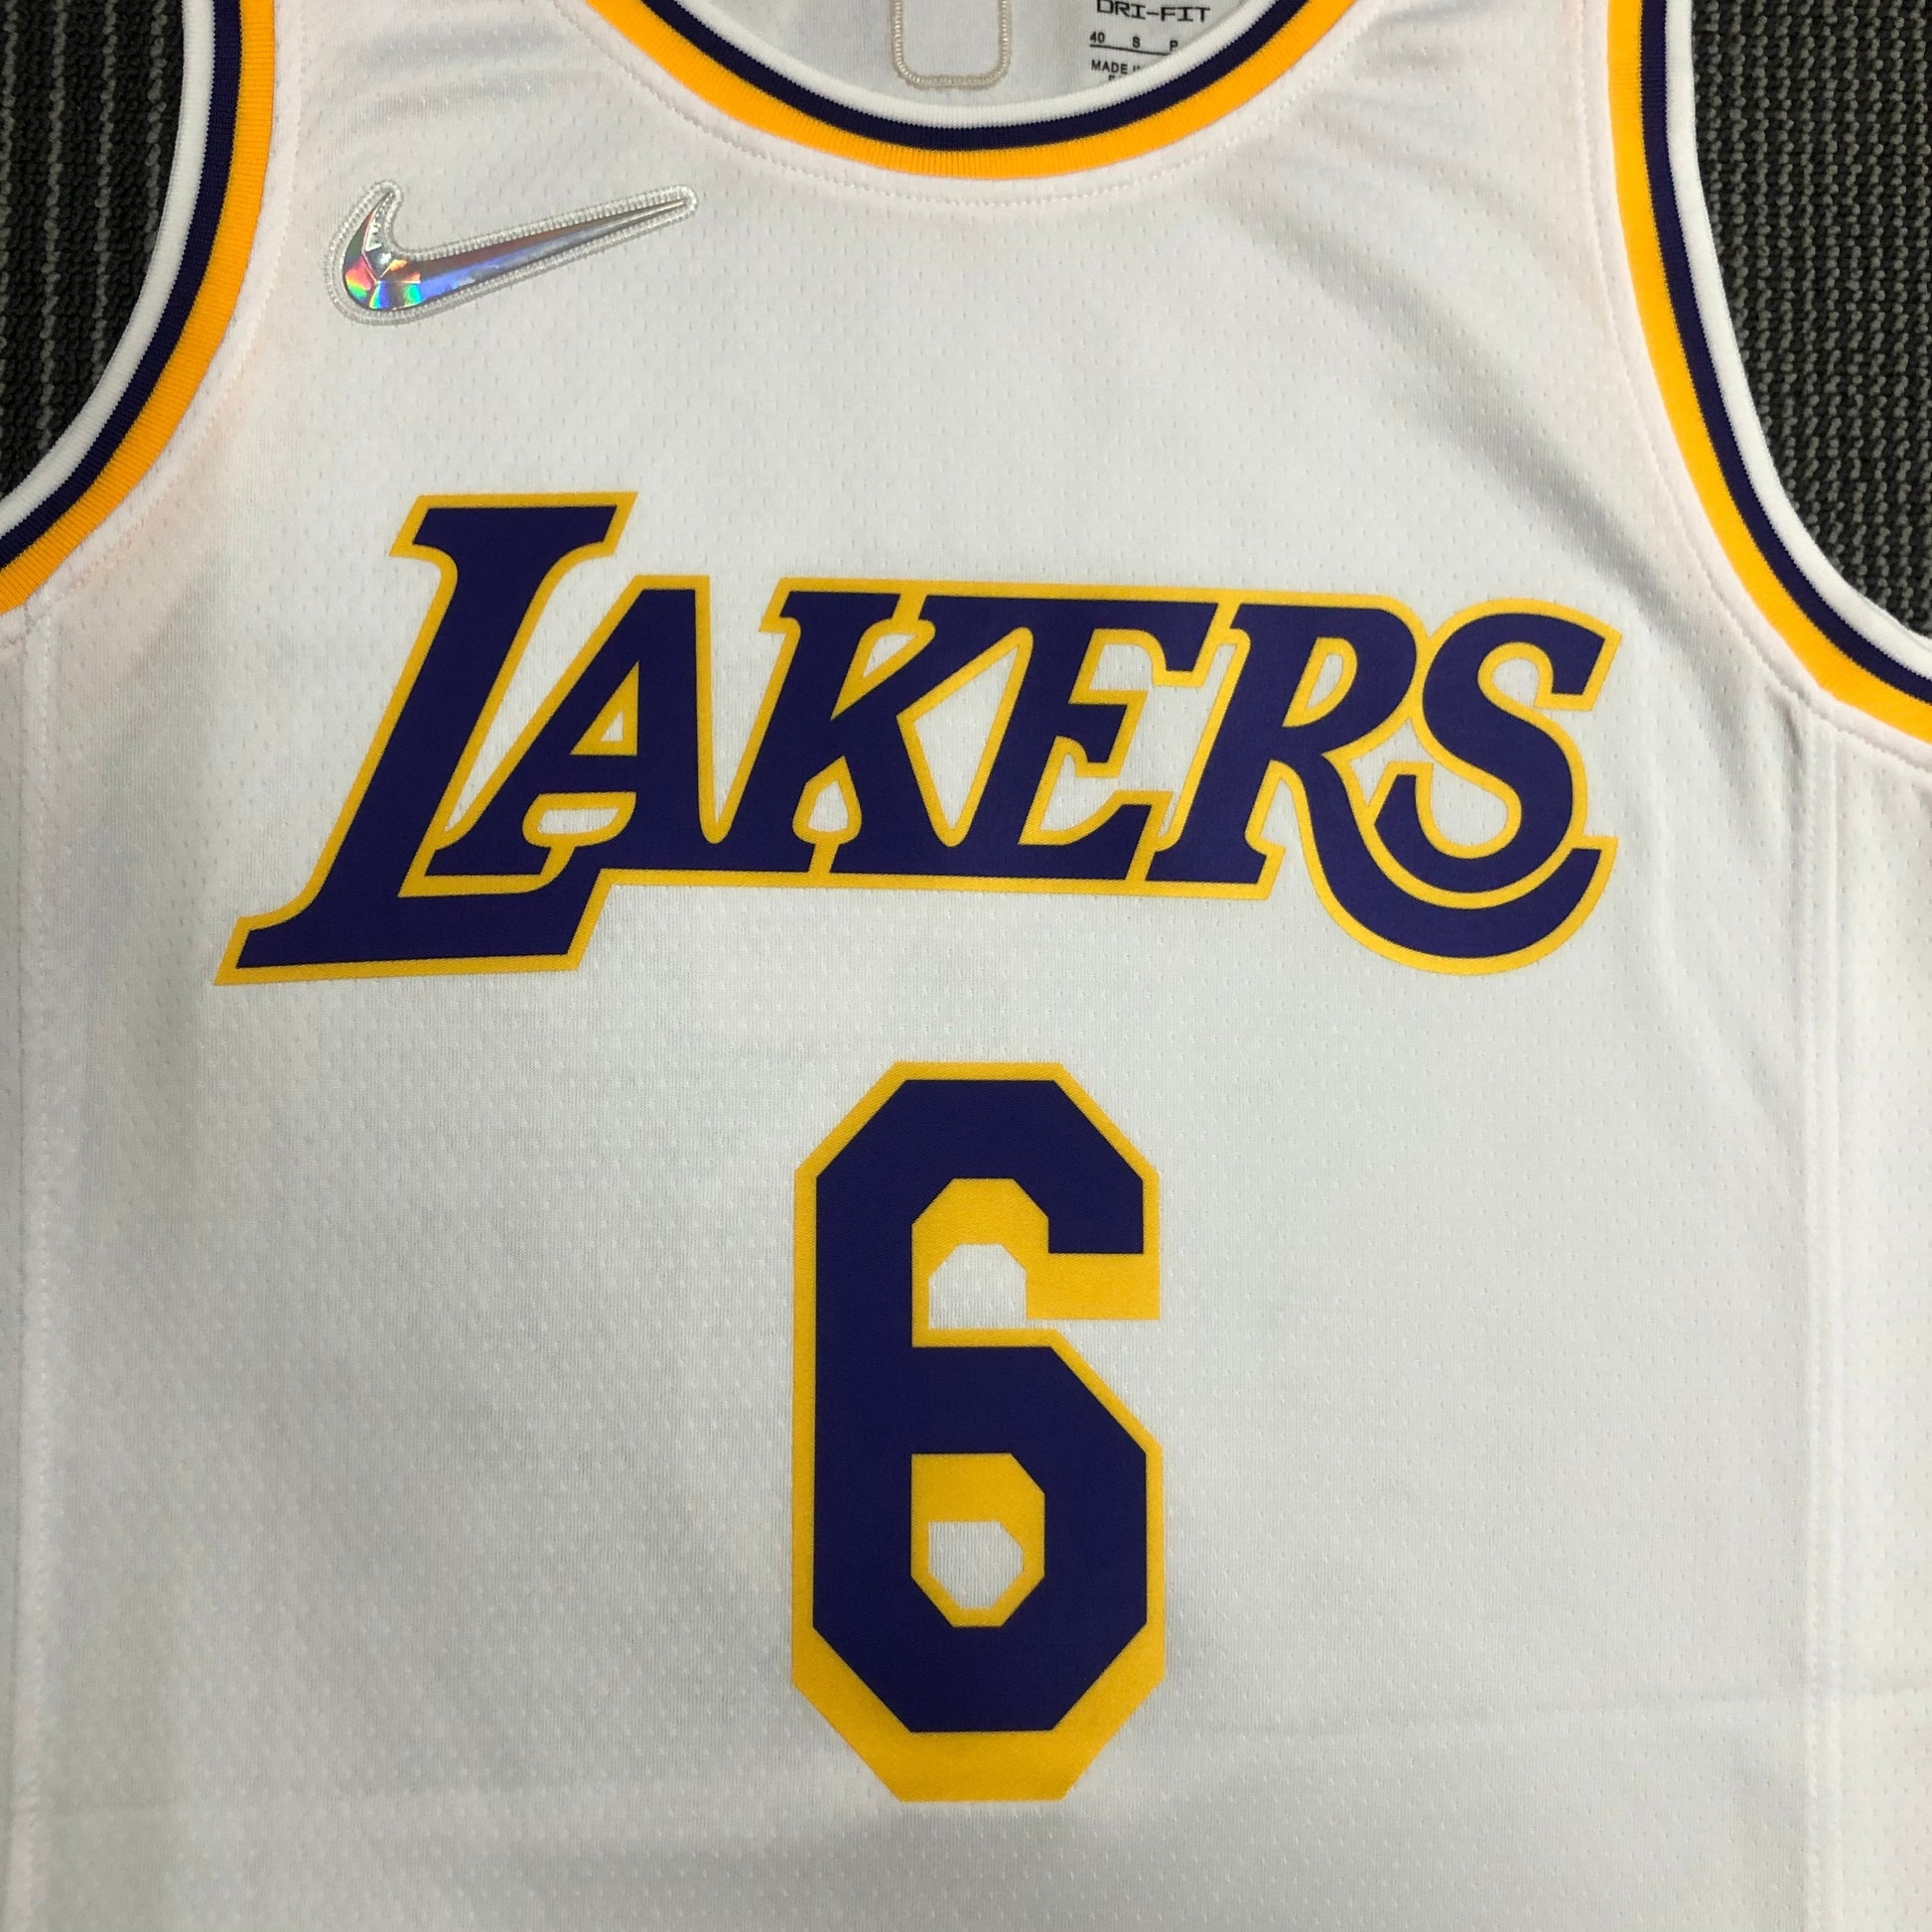 Nike LEBRON JAMES #23 LA Lakers Sunday White NBA Swingman Jersey sz Youth XL